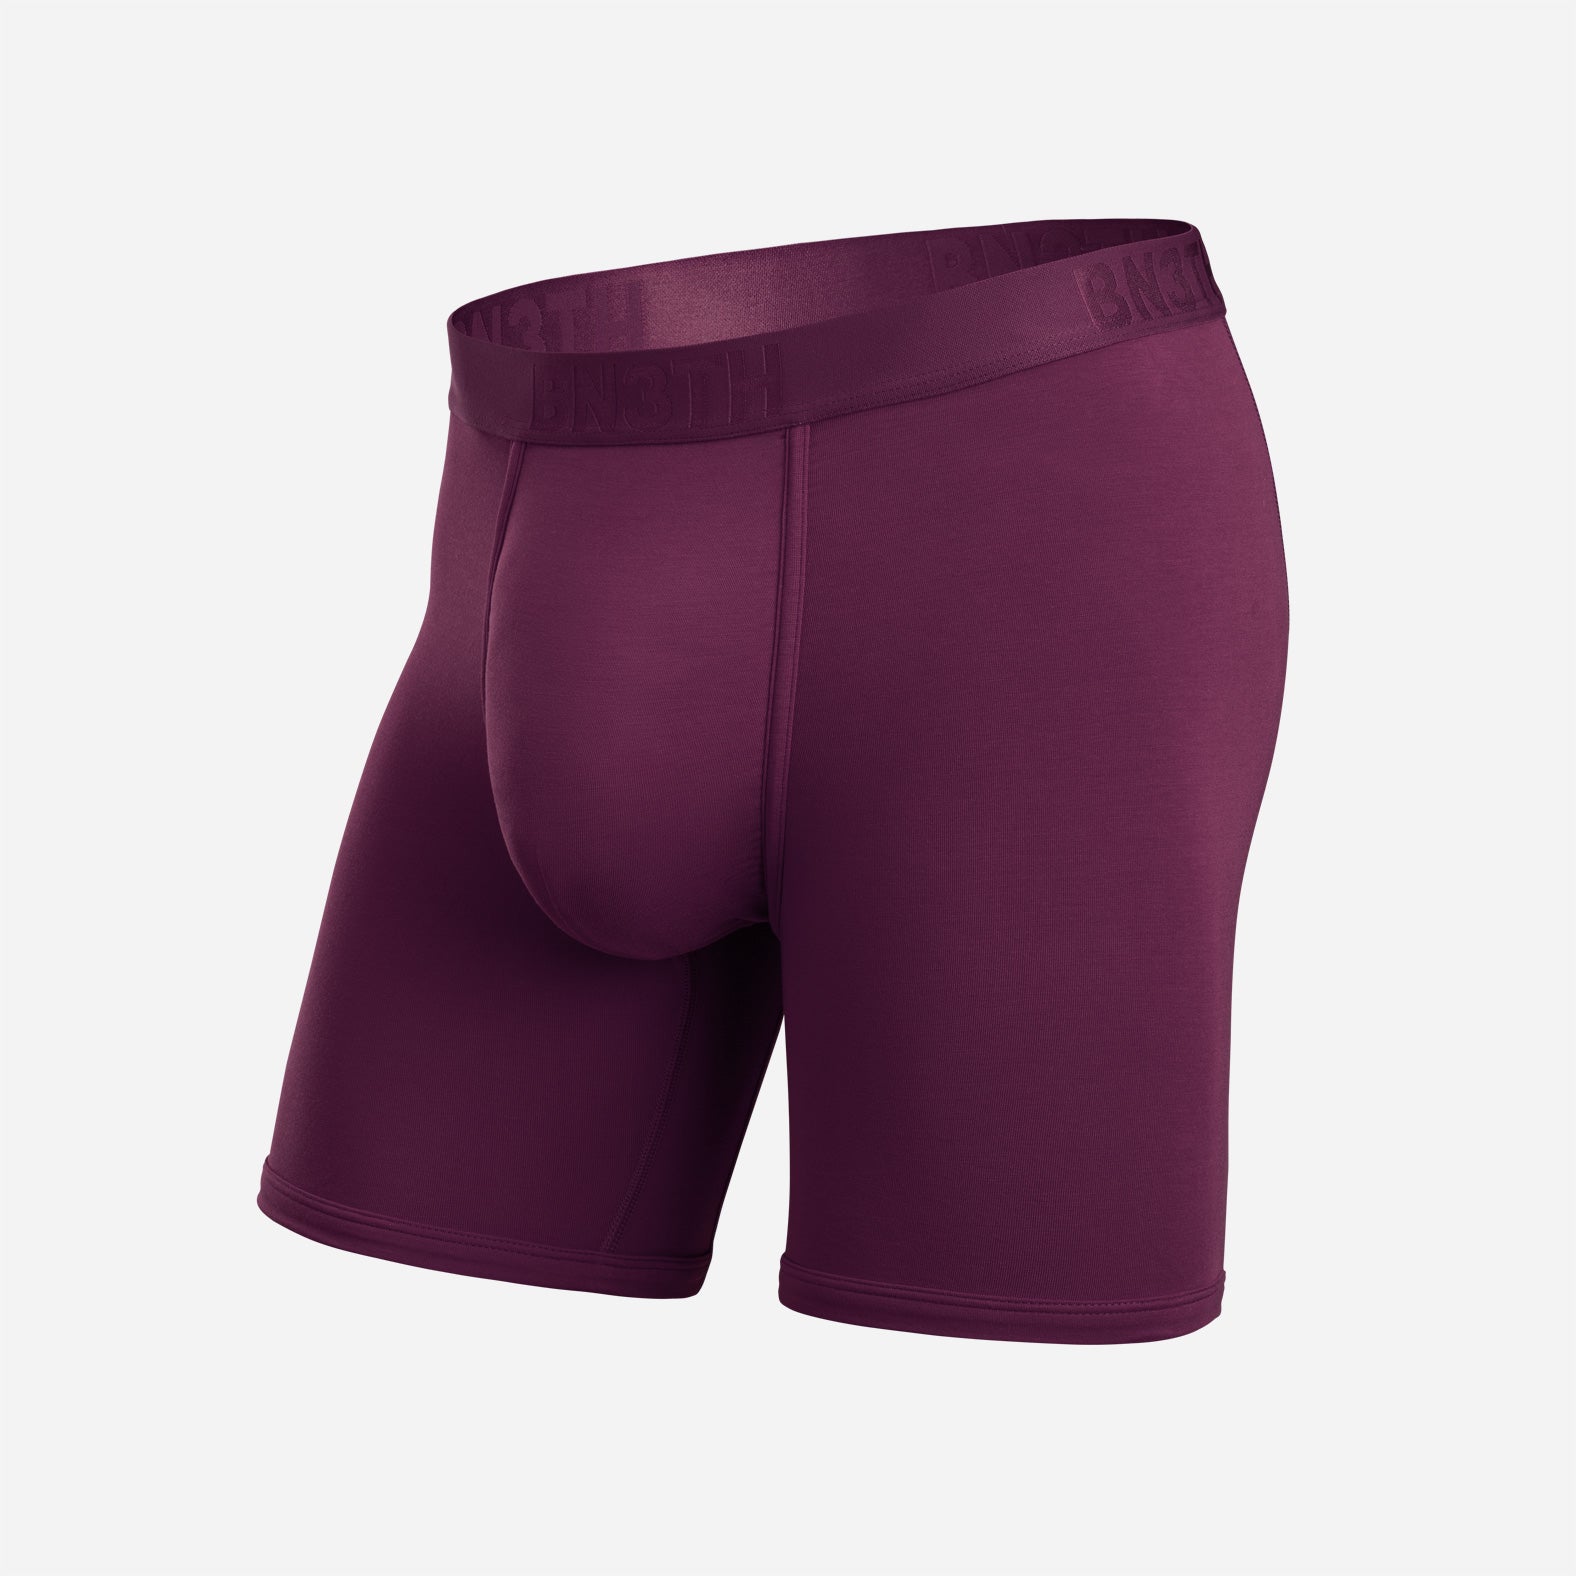 – BN3TH Cabernet Classic Brief: | Underwear Boxer